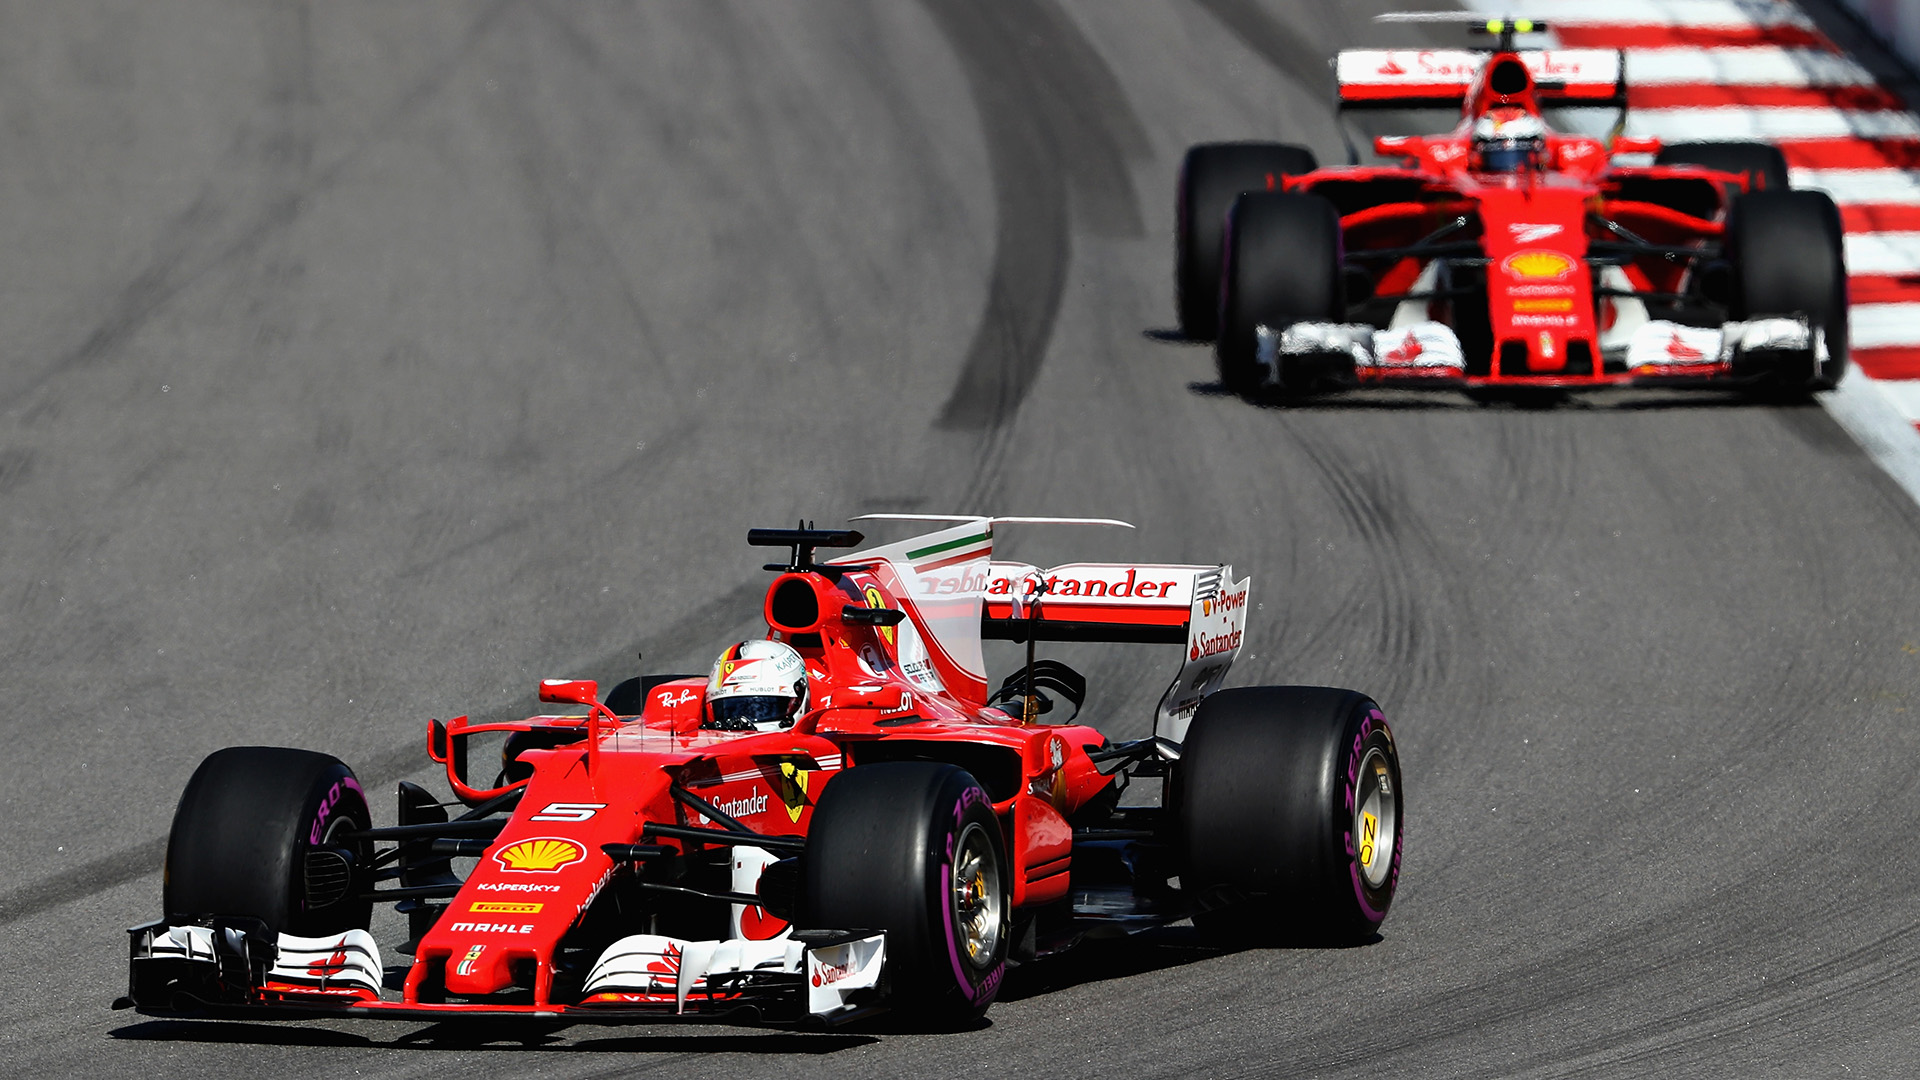 Hungarian GP: Ferrari face crunch Budapest race, say F1 Report panel ...